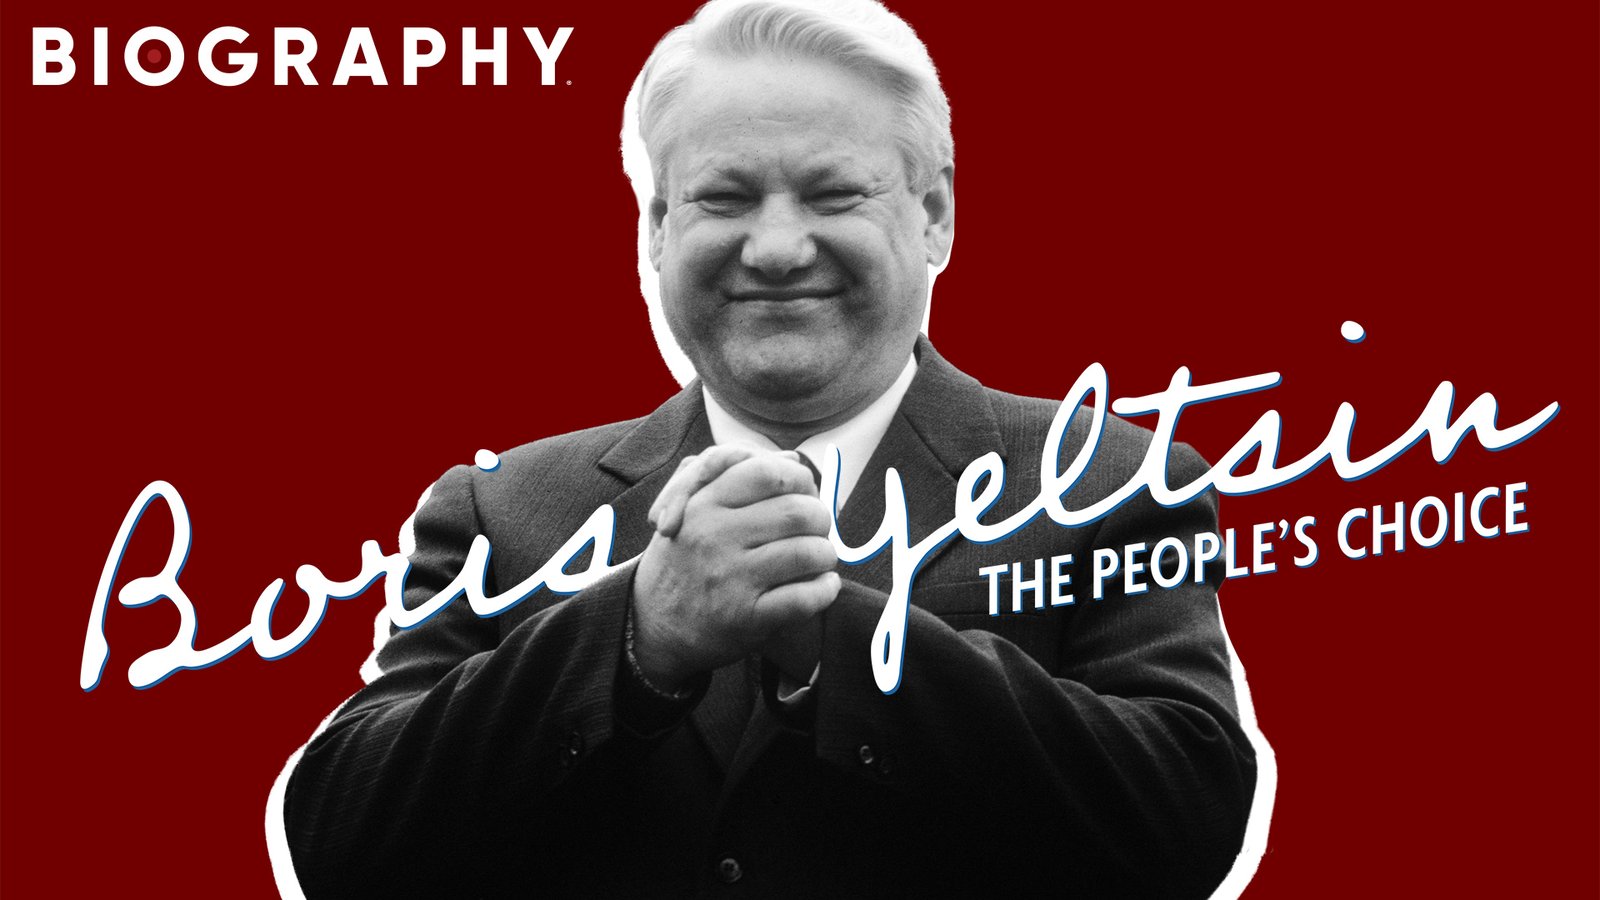 Boris Yeltsin: The People's Choice